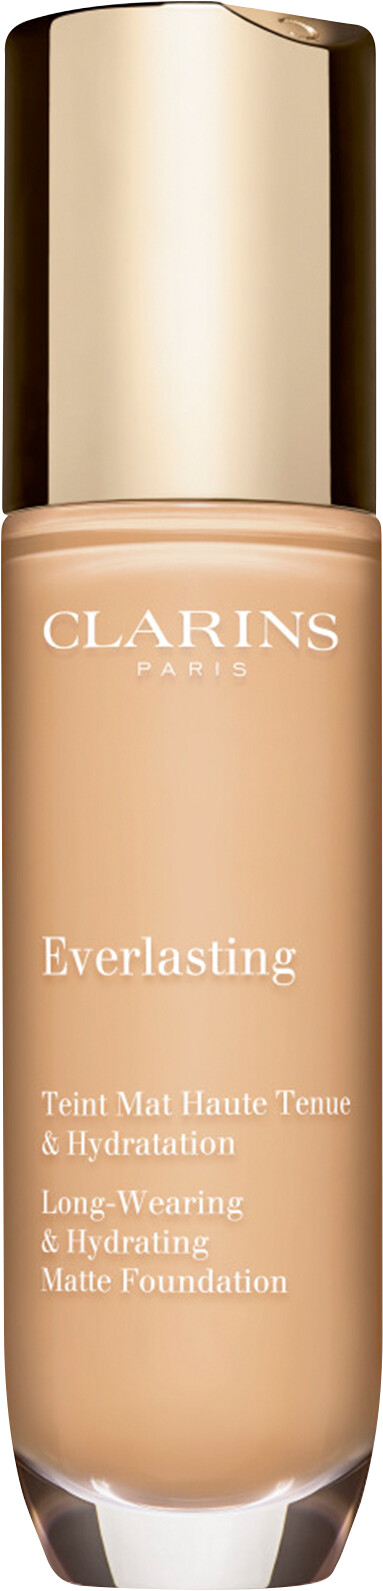 Clarins Everlasting Long-Wearing & Hydrating Matte Foundation 30ml 105.5W - Flesh